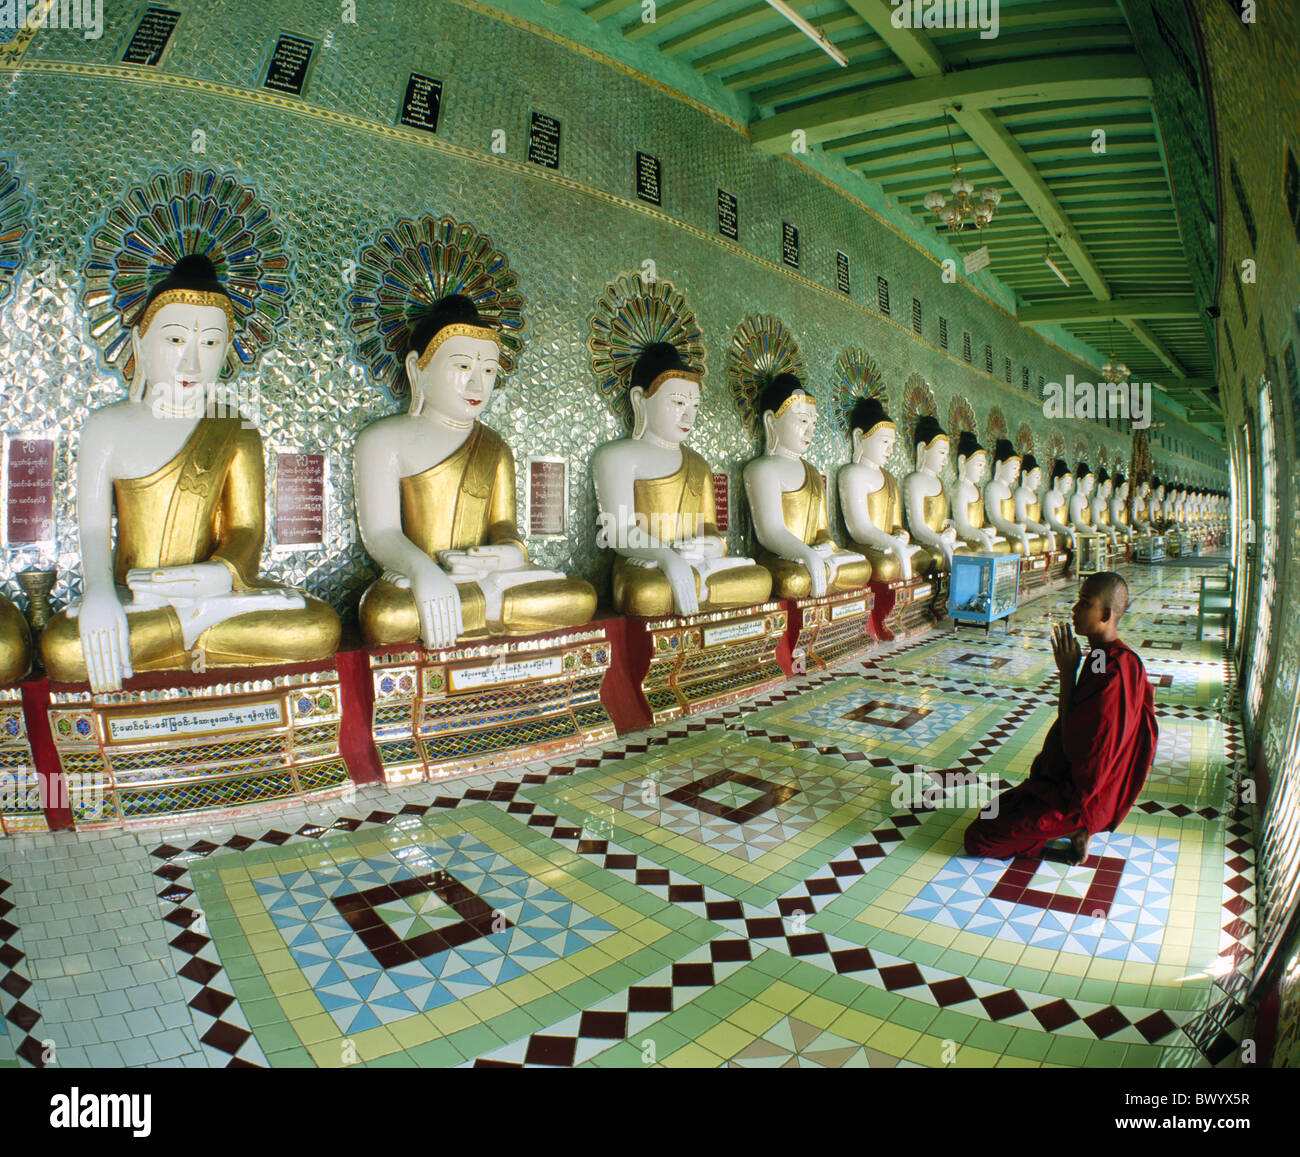 Burma Asien Buddha Statuen Buddhismus Burma Figuren im inneren Kultur Kultur Mönch Monch Myanmar kein Modell rele Stockfoto